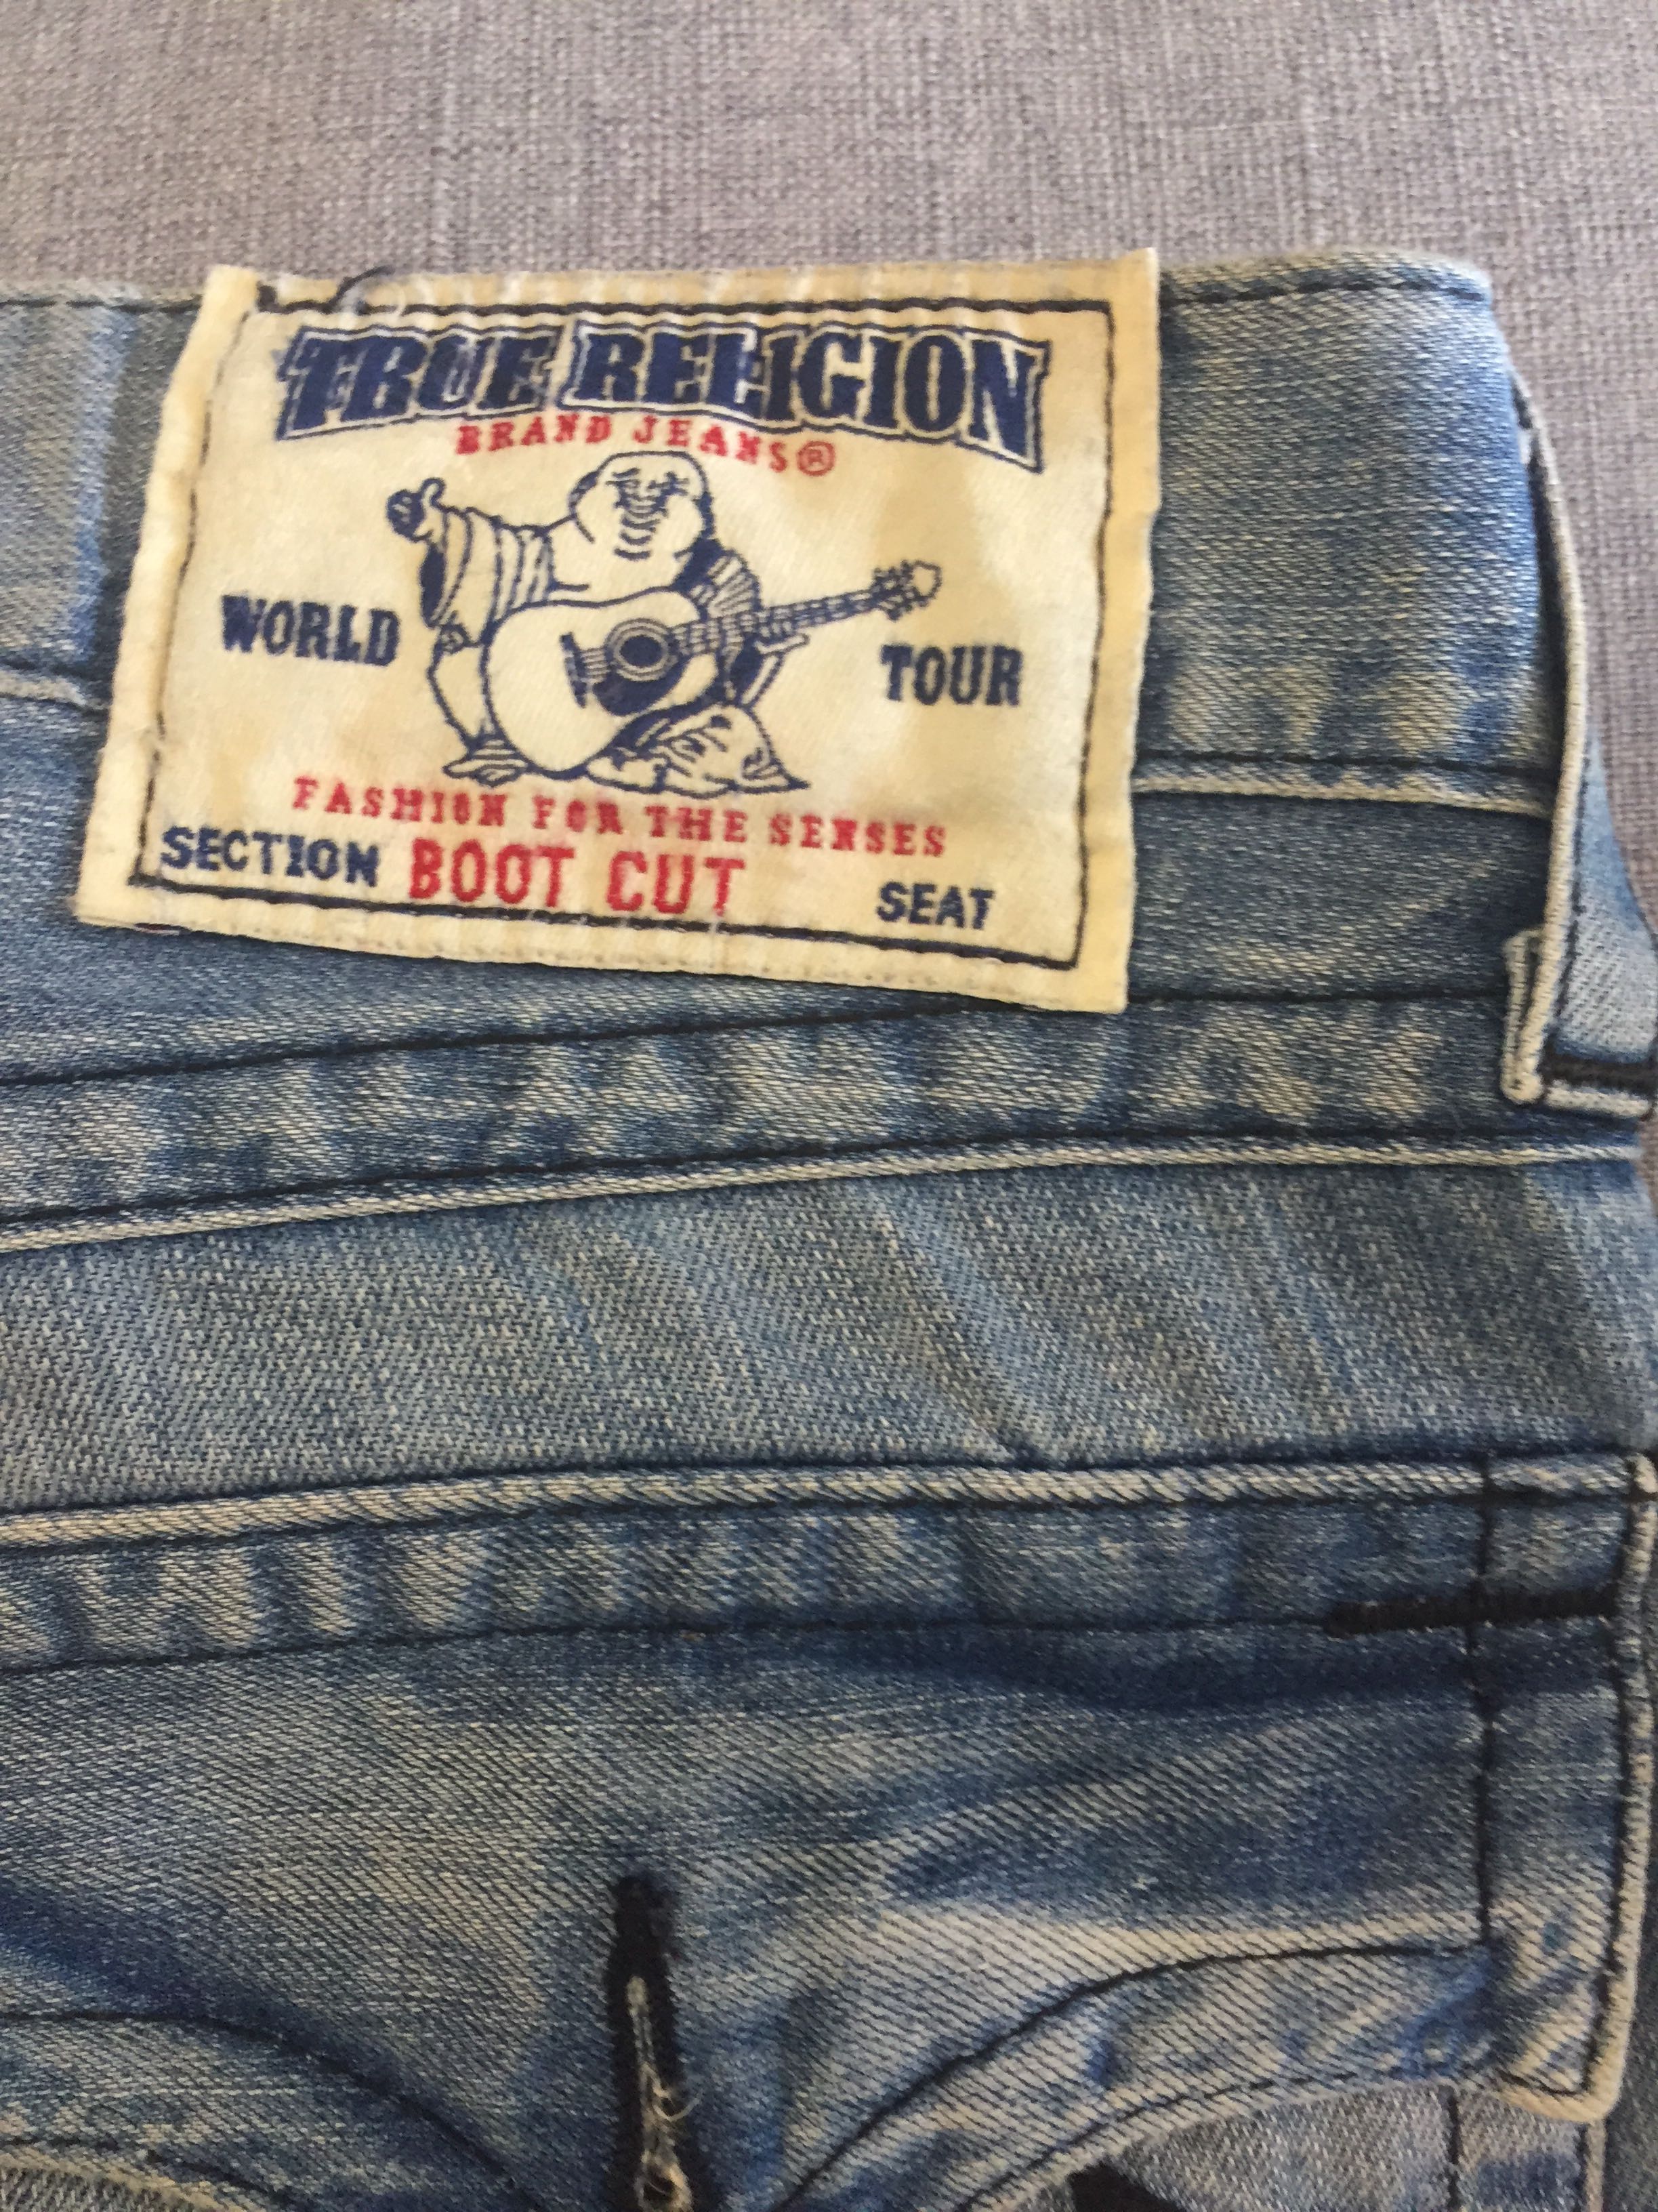 true religion jeans size 30